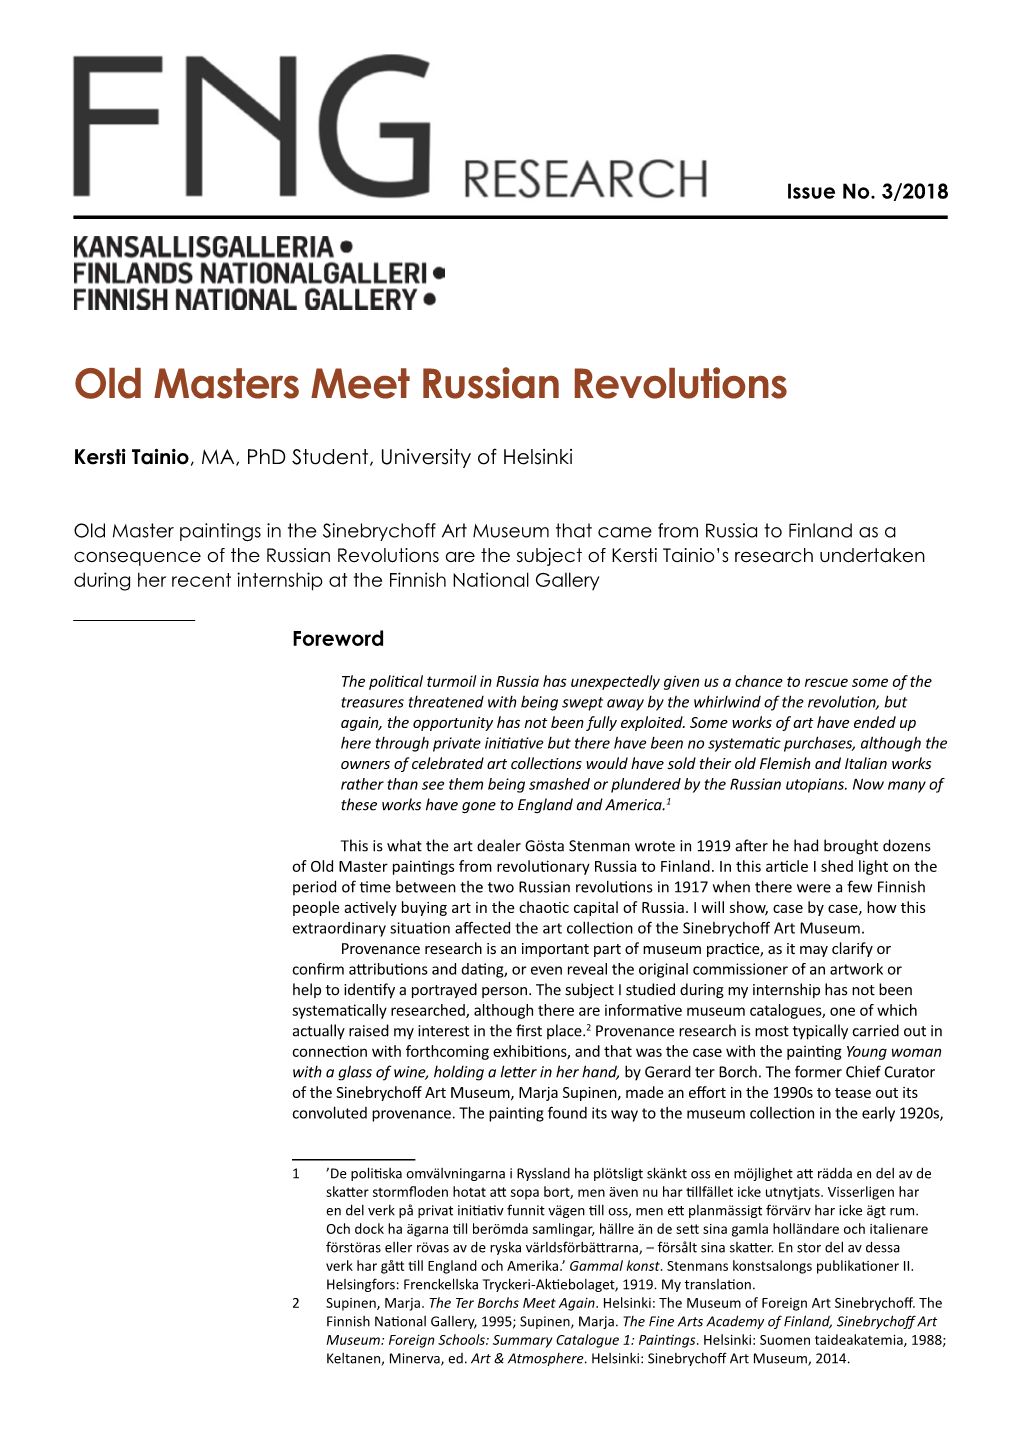 Old Masters Meet Russian Revolutions